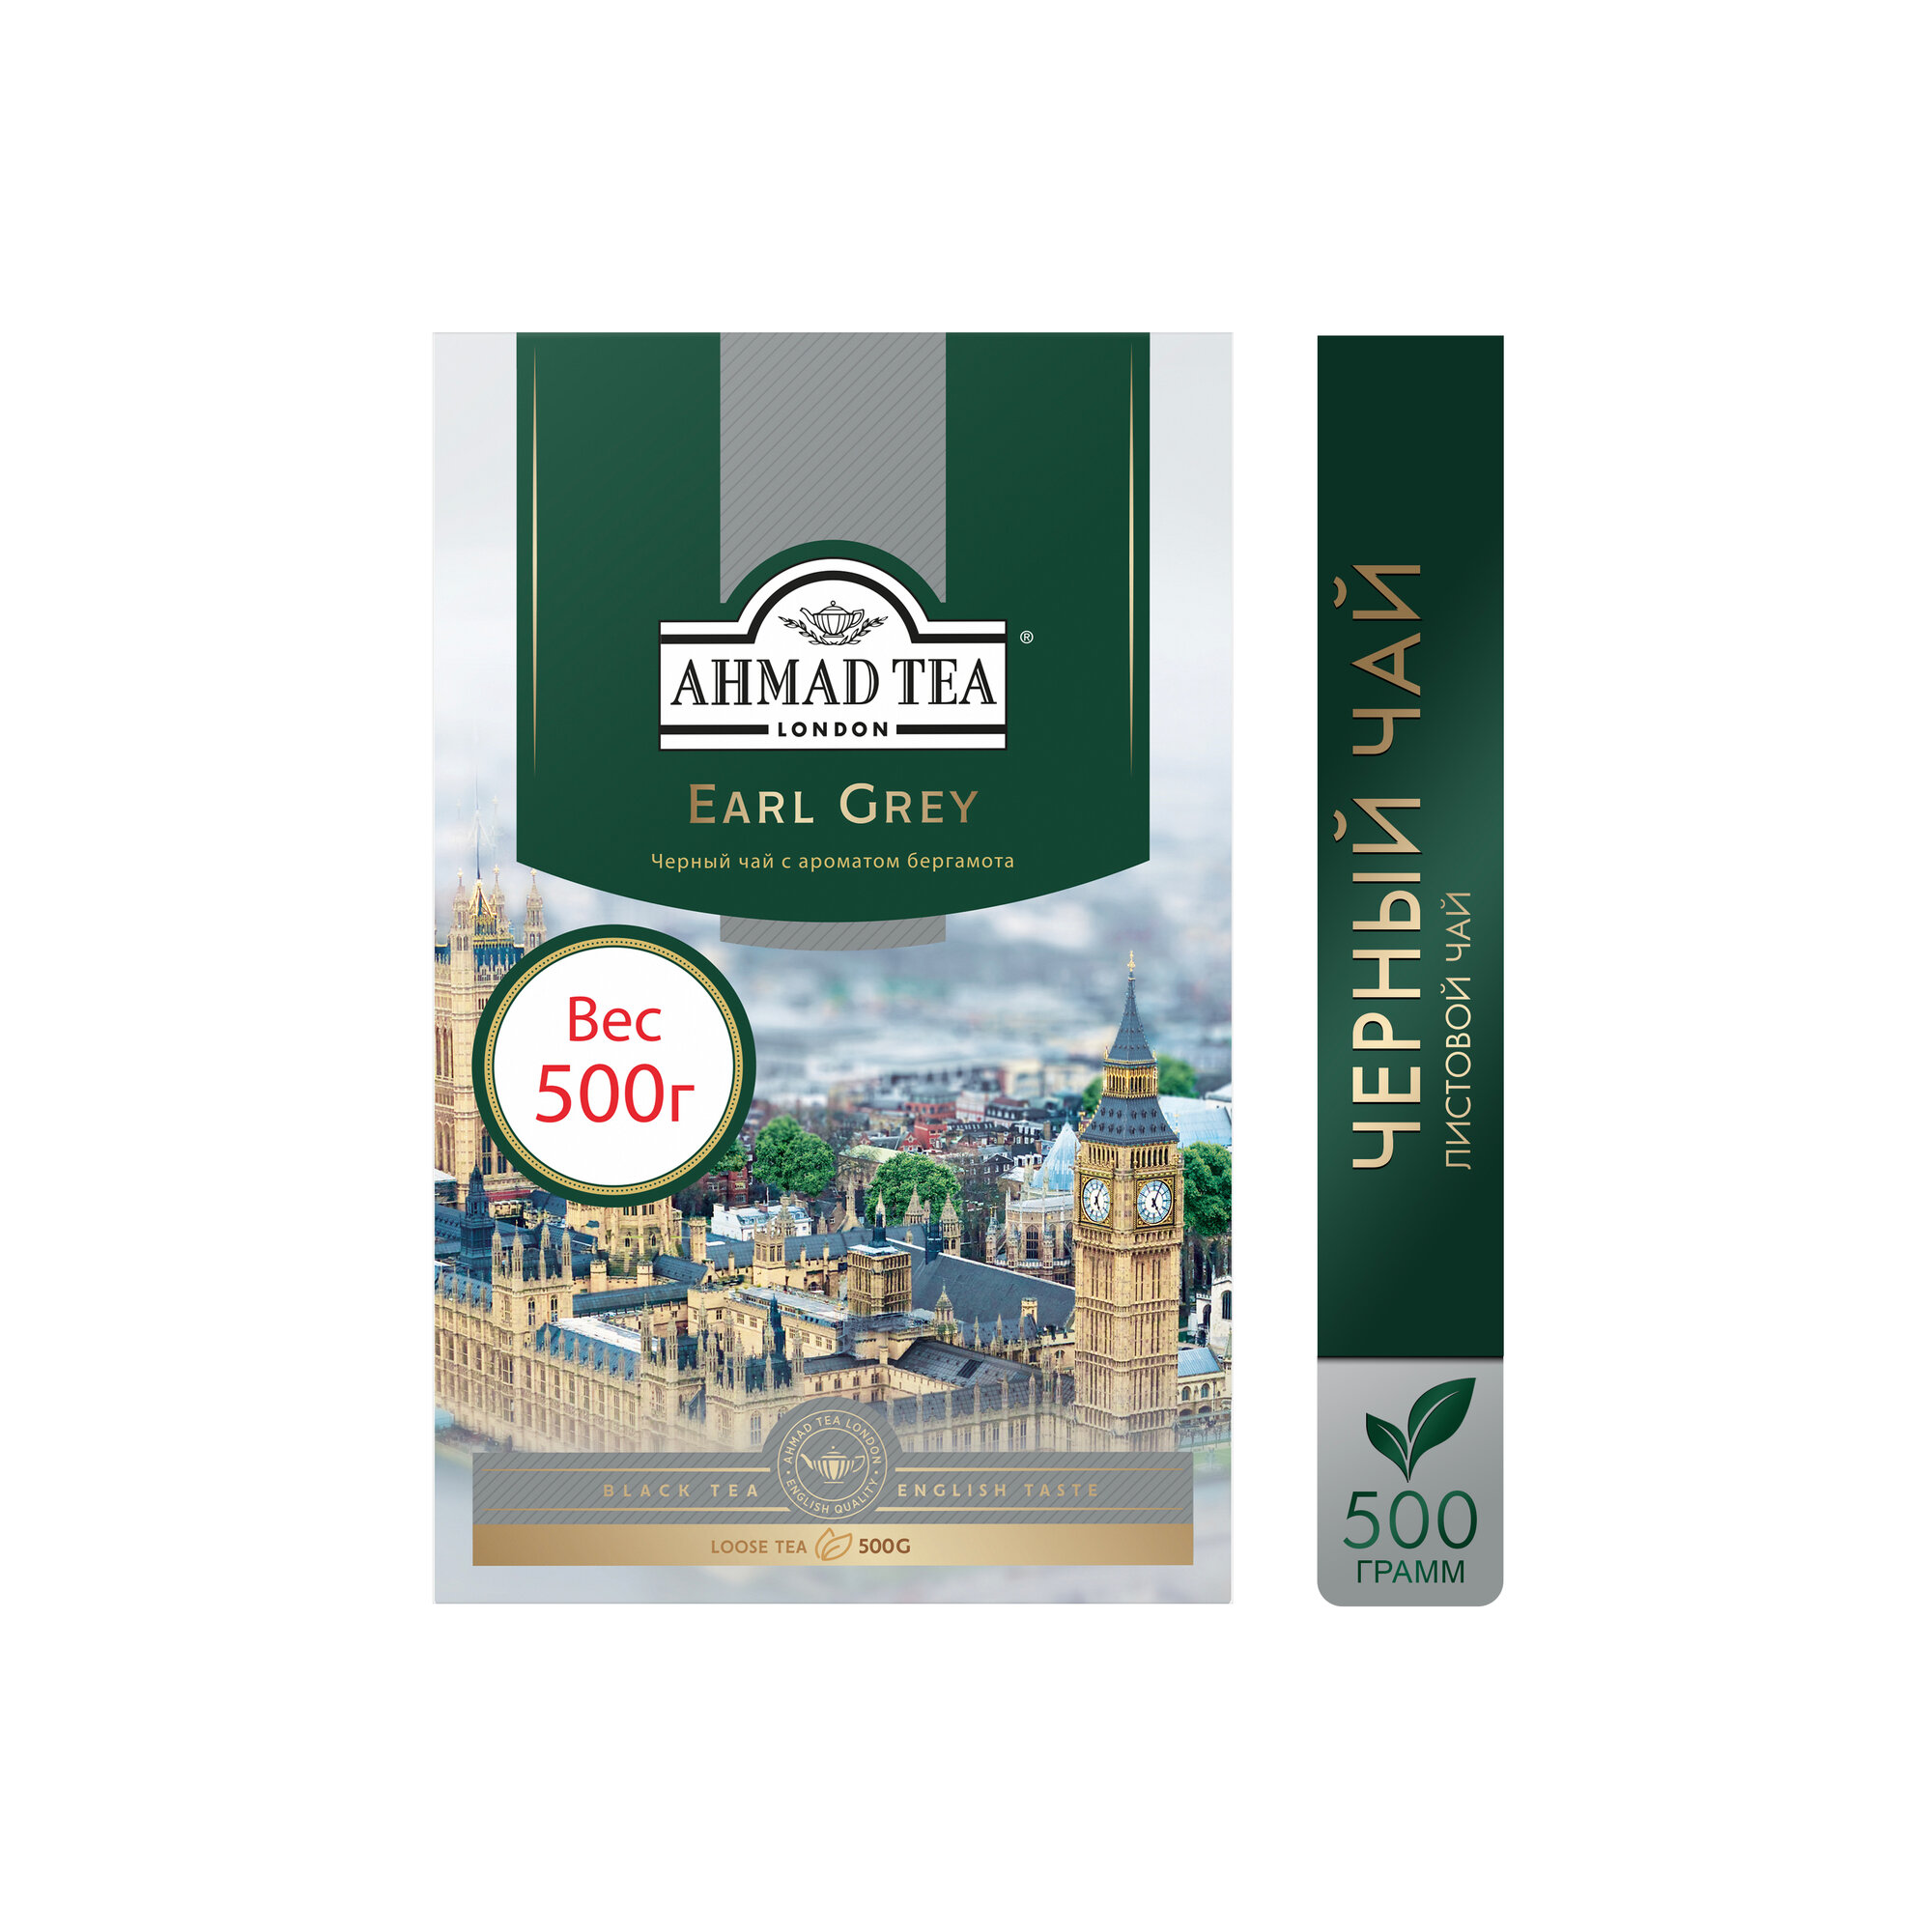 861-08 Чай "Ahmad Tea" Чай Эрл Грей, черны листовой, картон.коробка, 500г